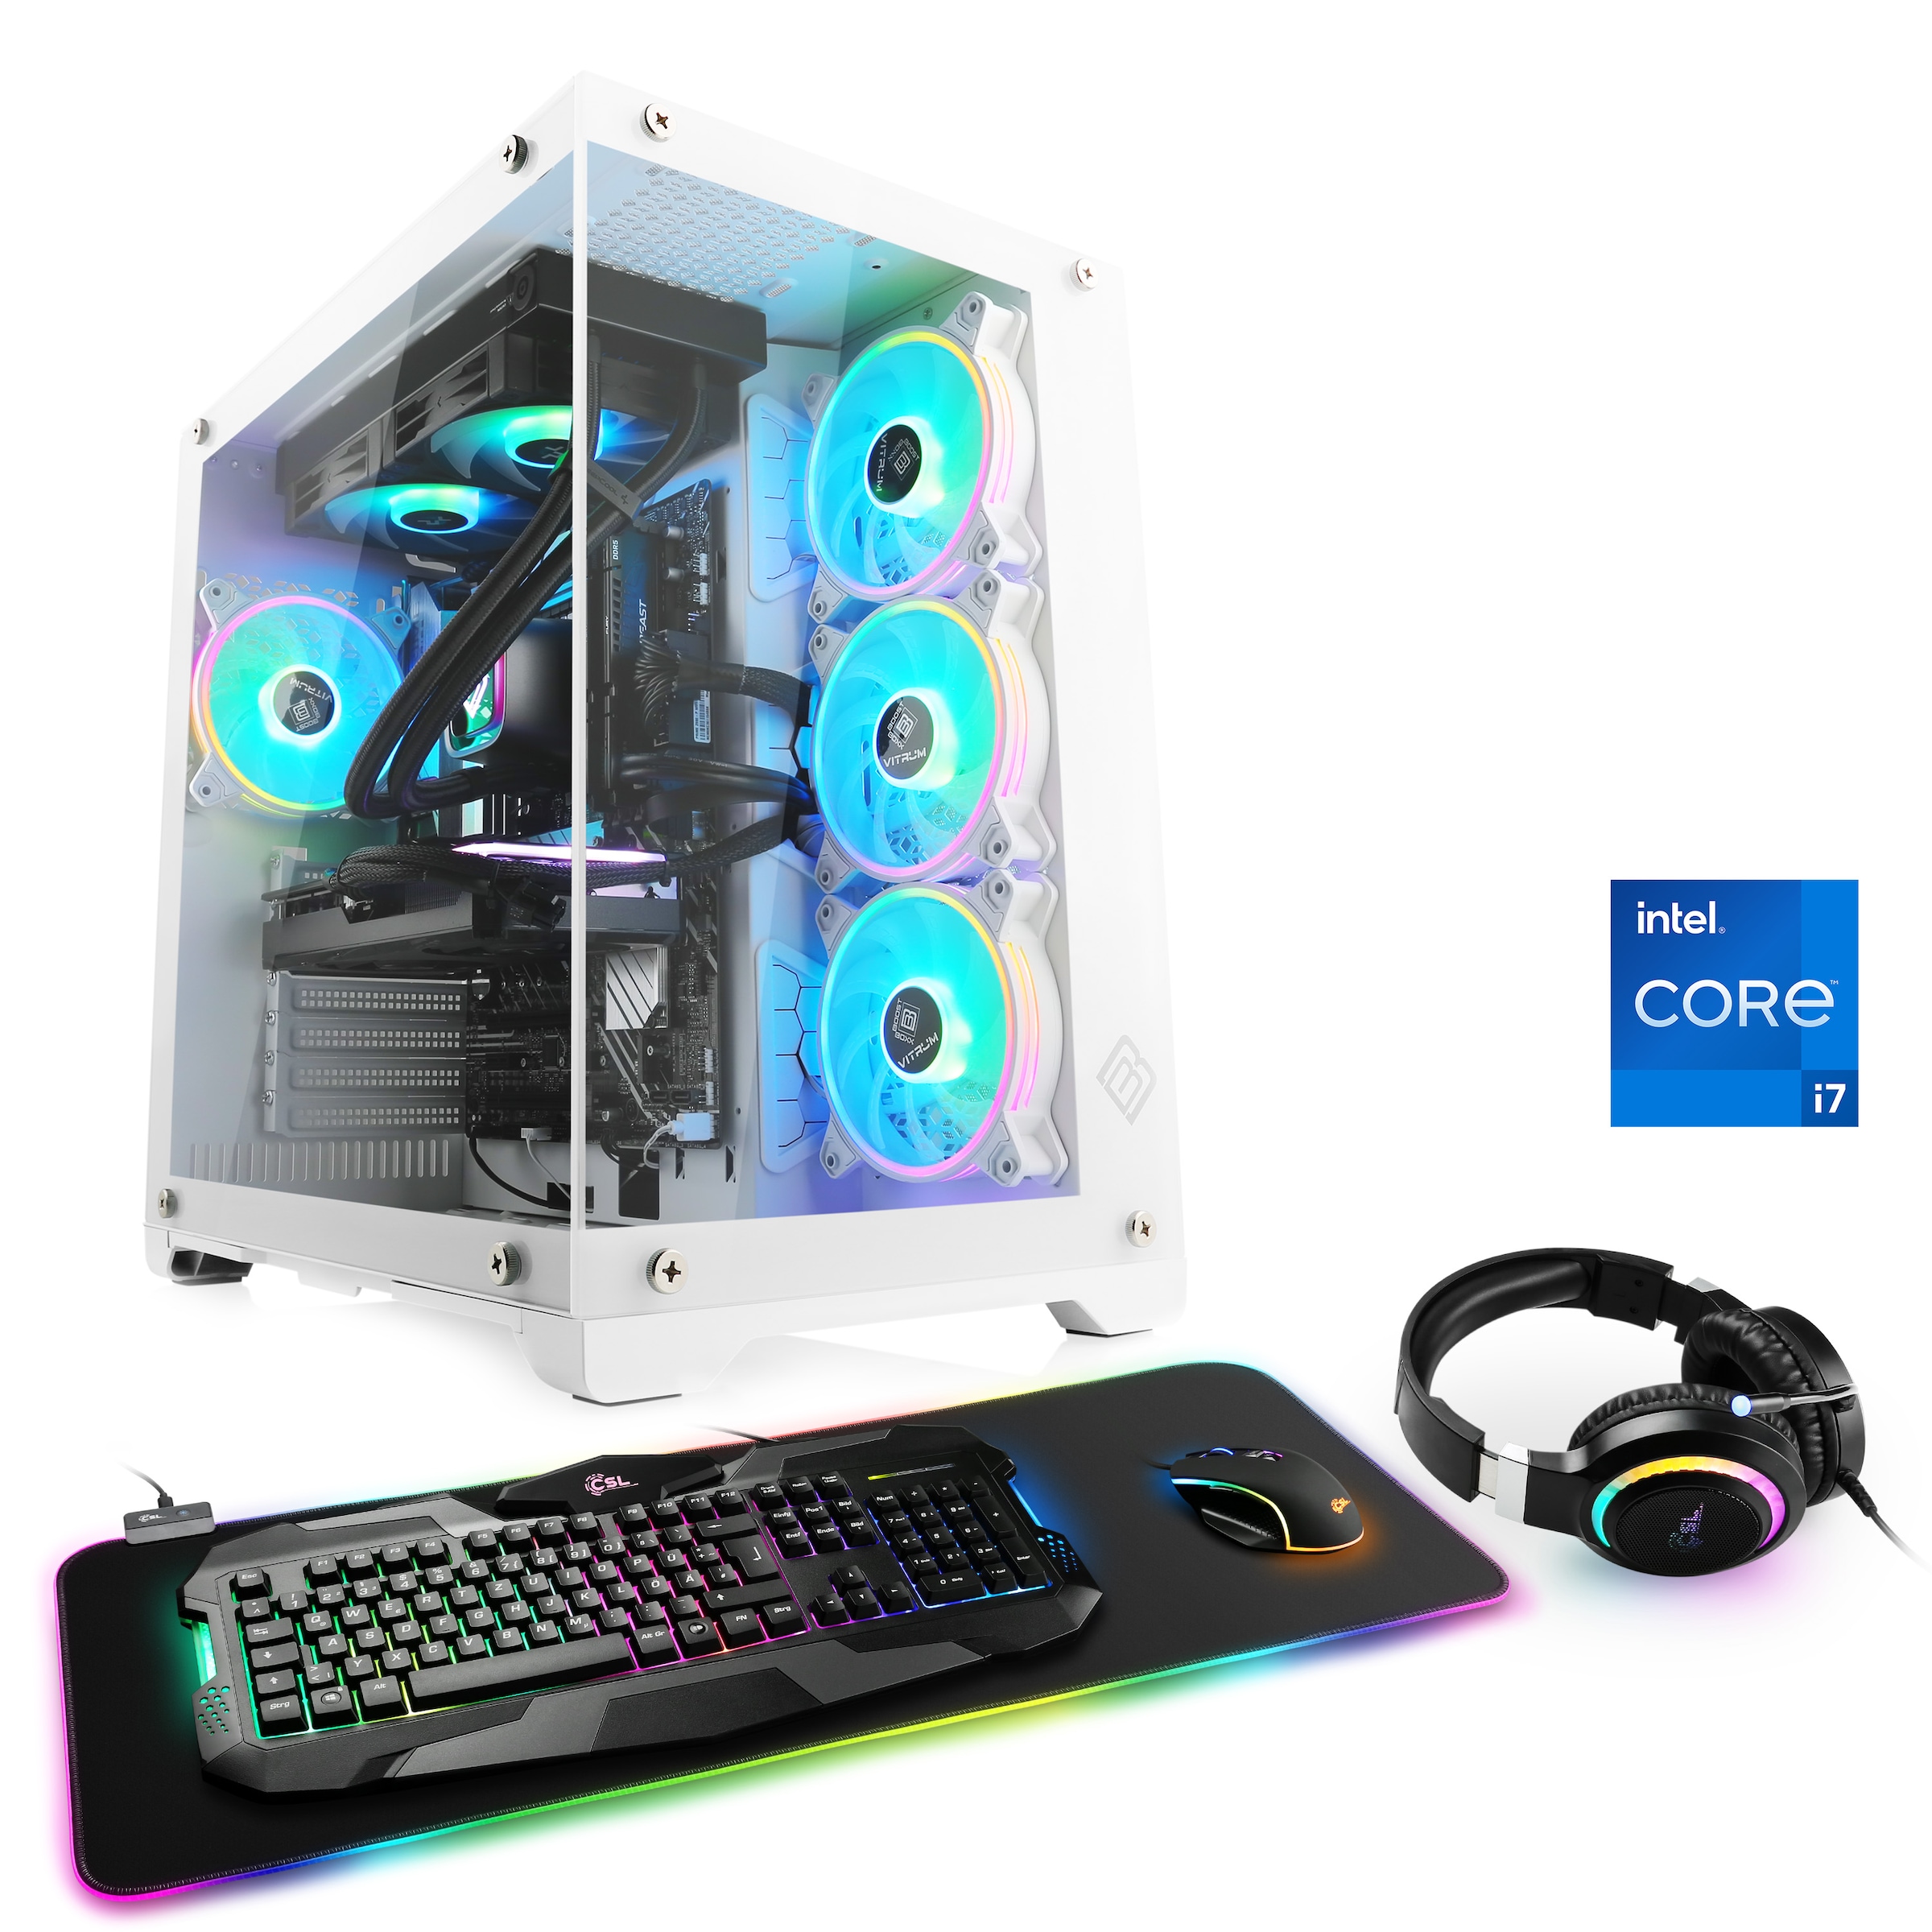 CSL Gaming-PC »Aqueon C77112 Advanced Edition« jetzt kaufen bei OTTO